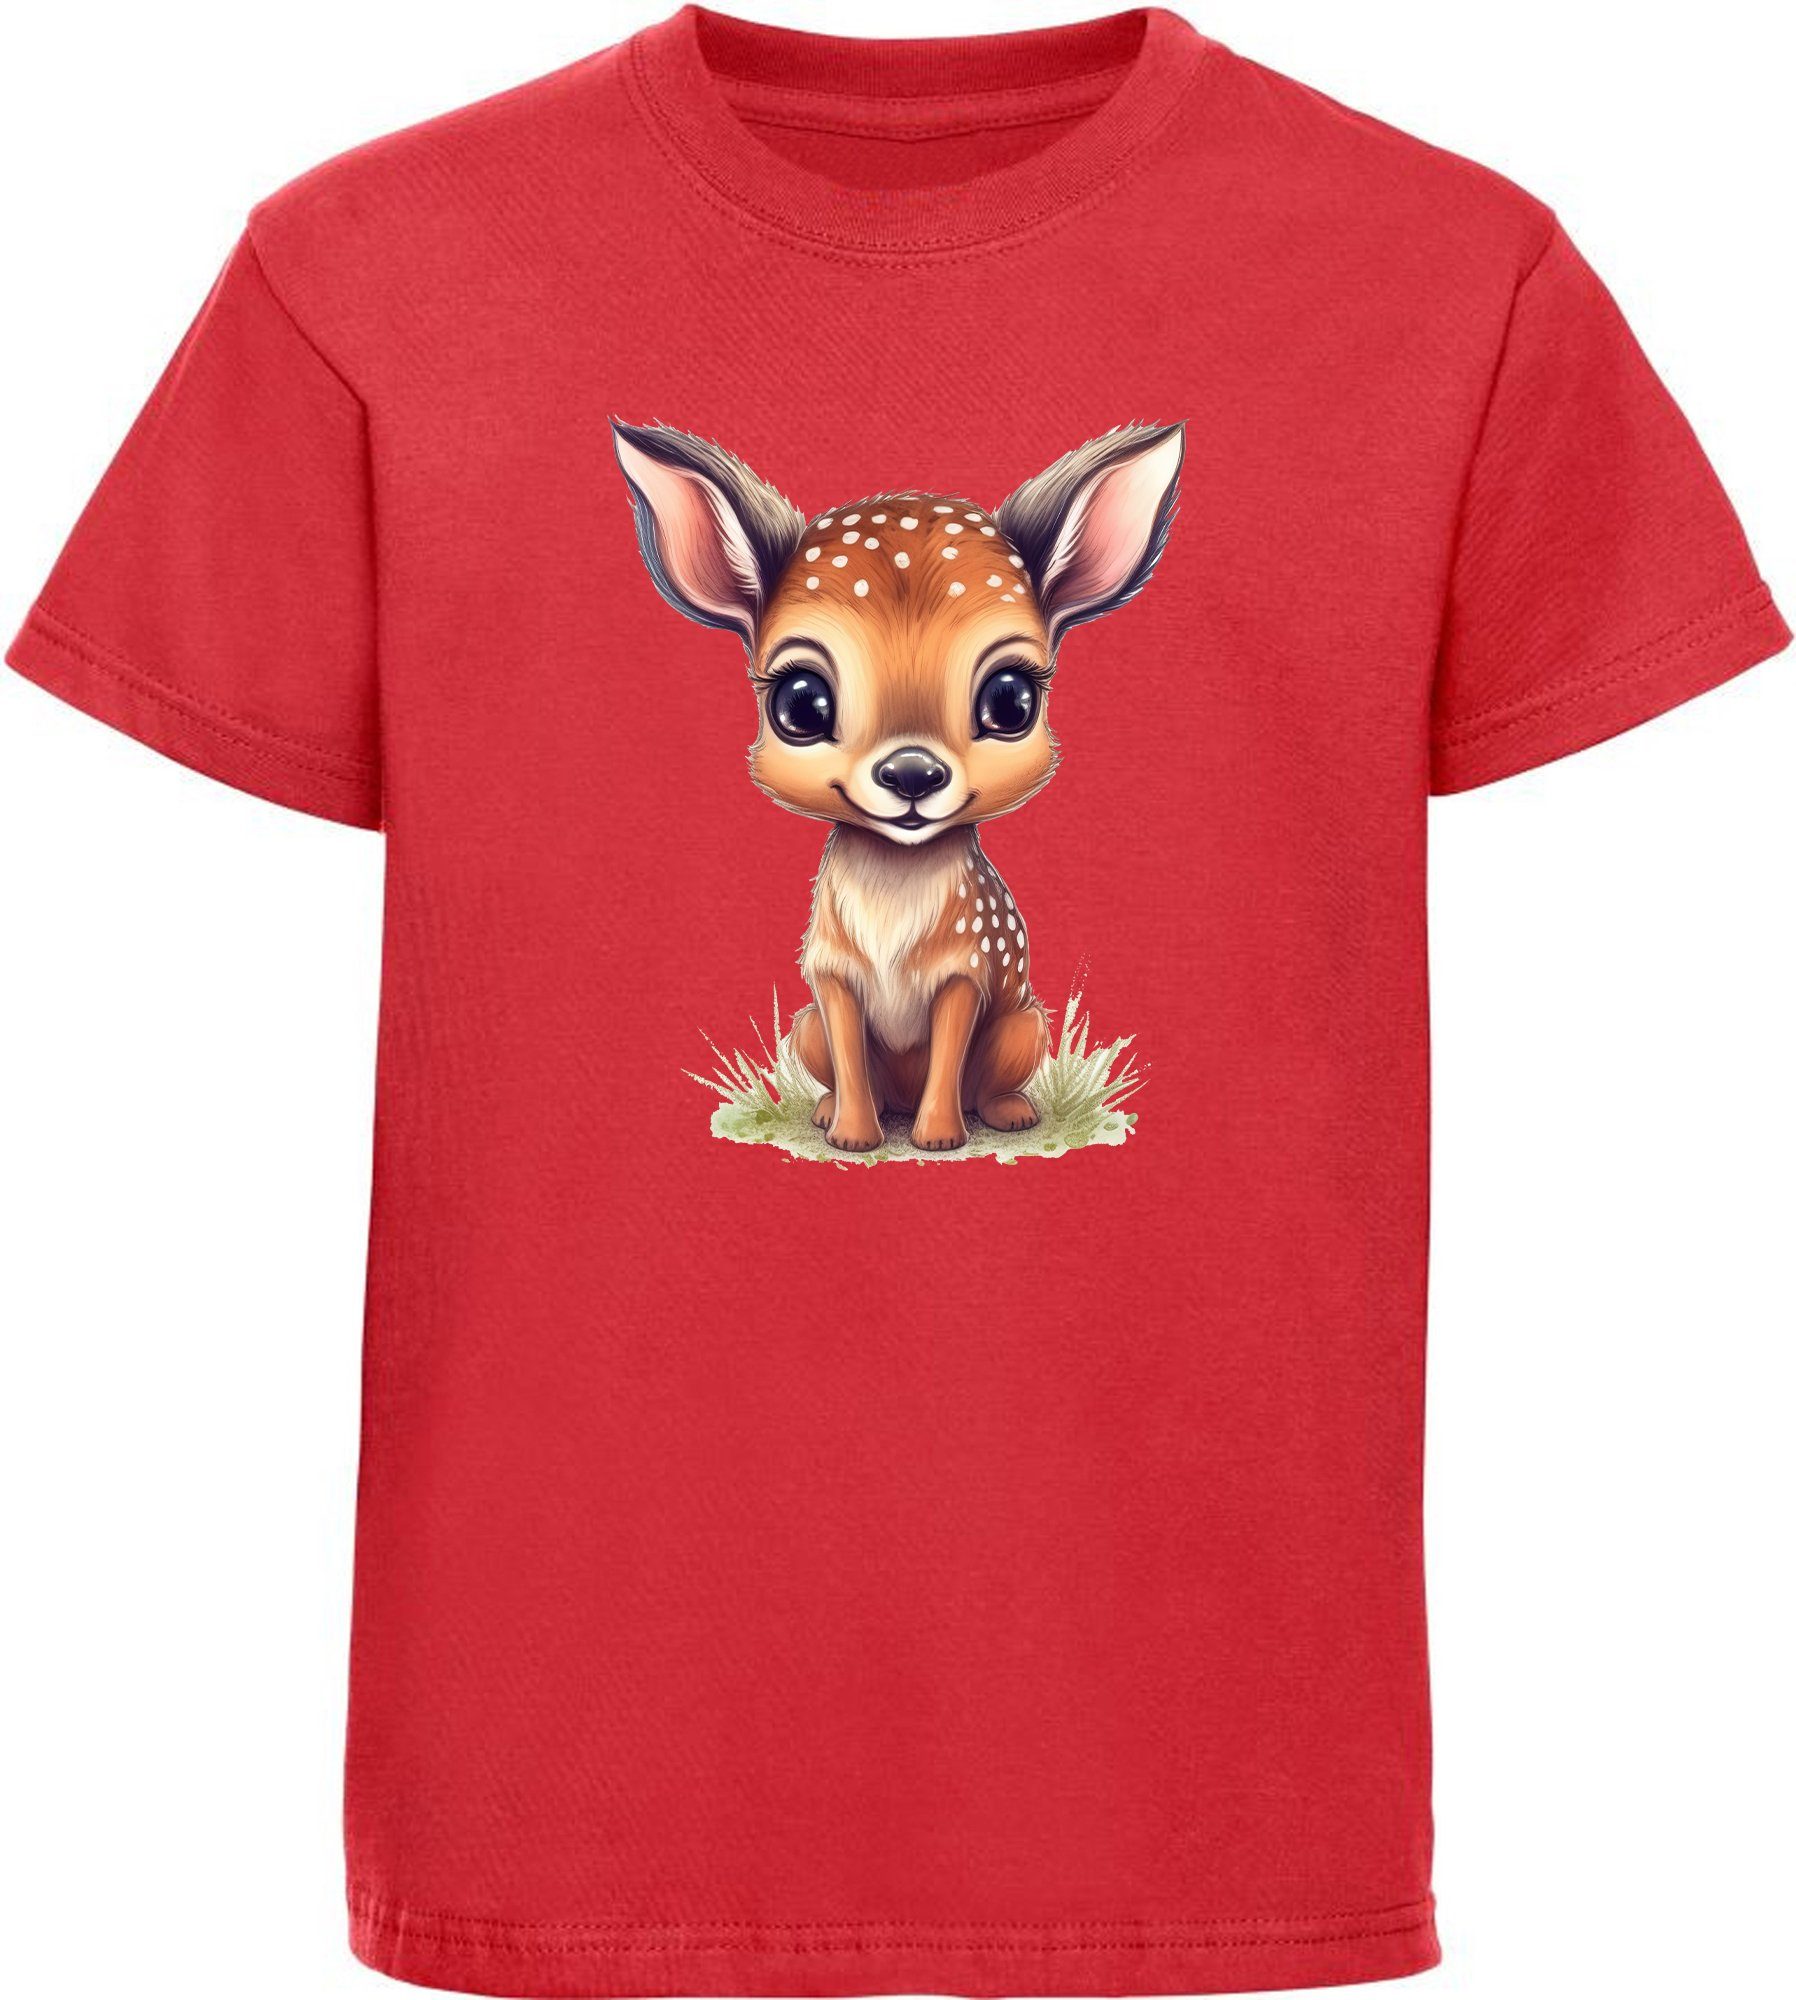 MyDesign24 T-Shirt Kinder Wildtier Print Shirt bedruckt - Baby Reh Rehkitz Baumwollshirt mit Aufdruck, i269 rot